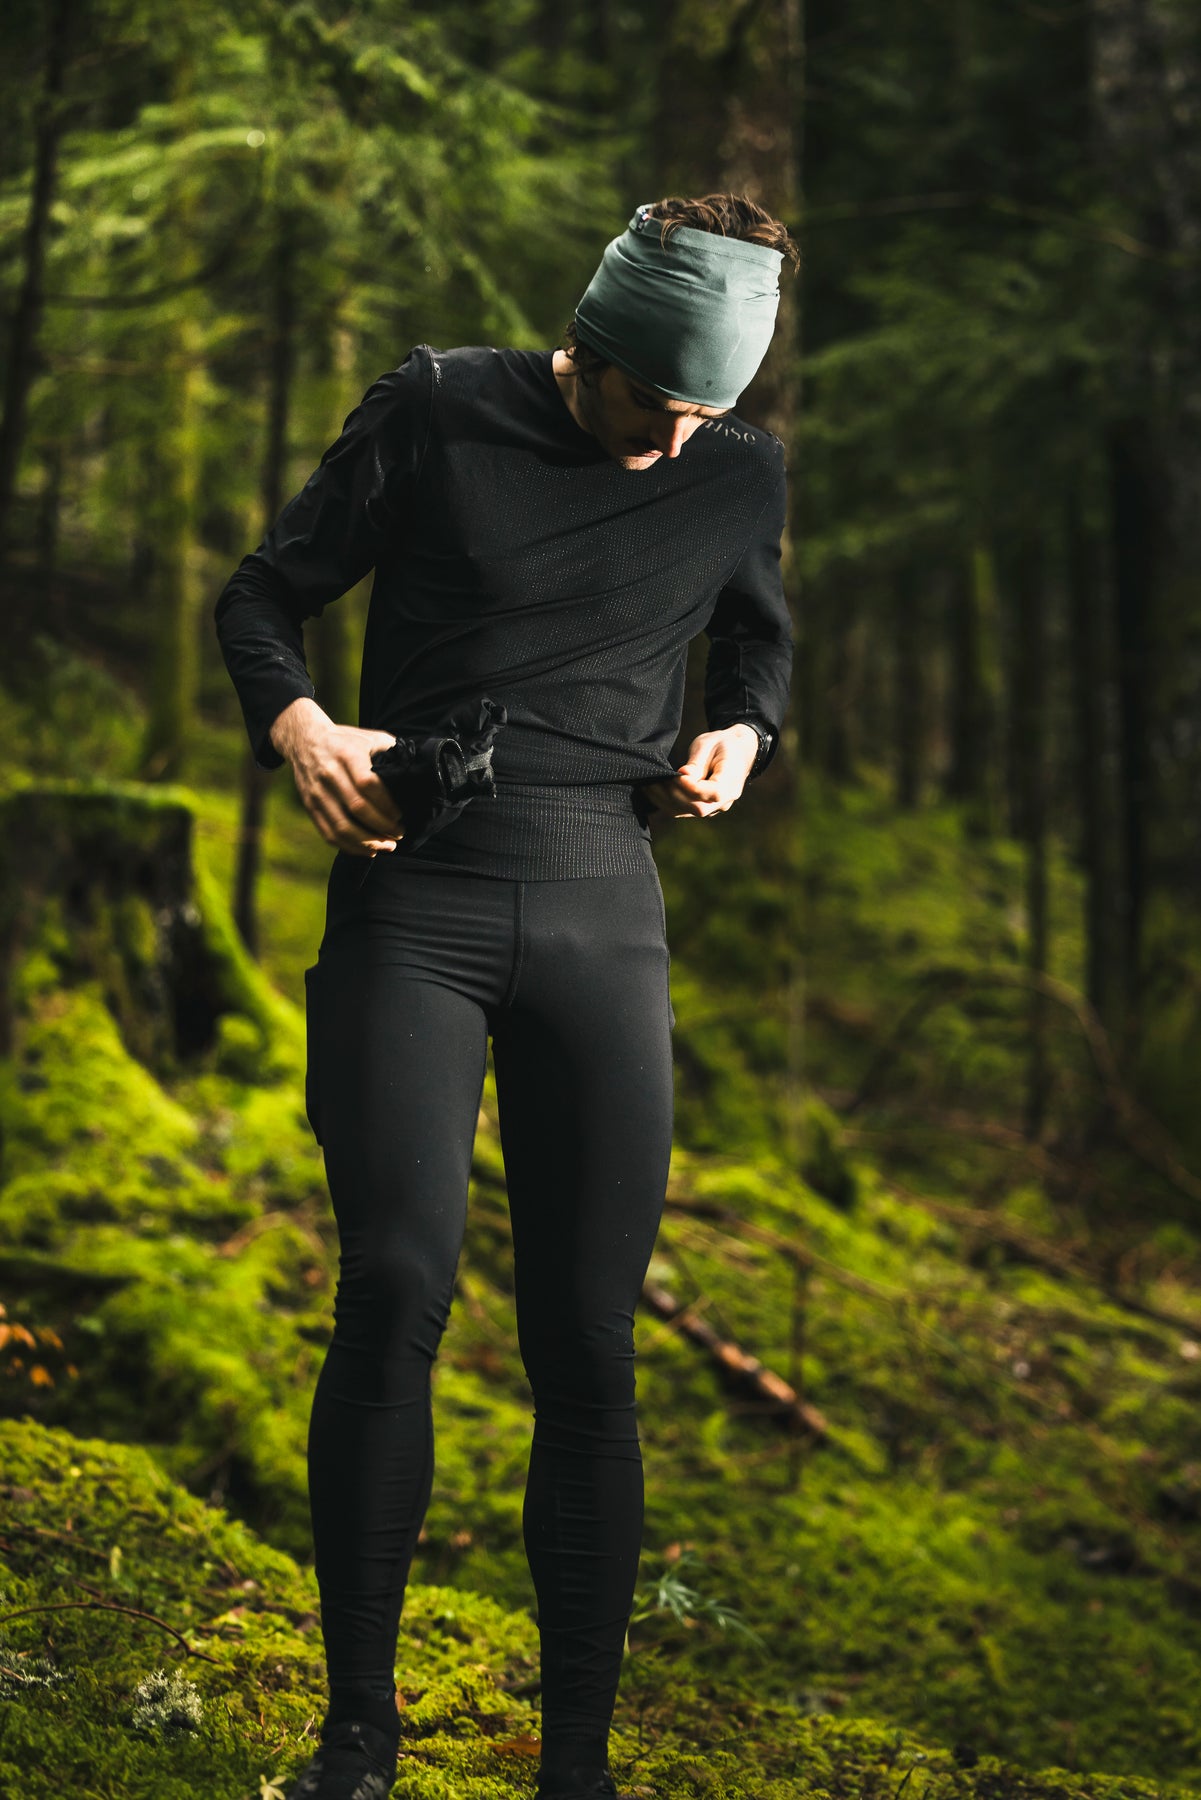 Veste Trail Running Chaude et Ultra Compacte - NanoShell Homme - Wise